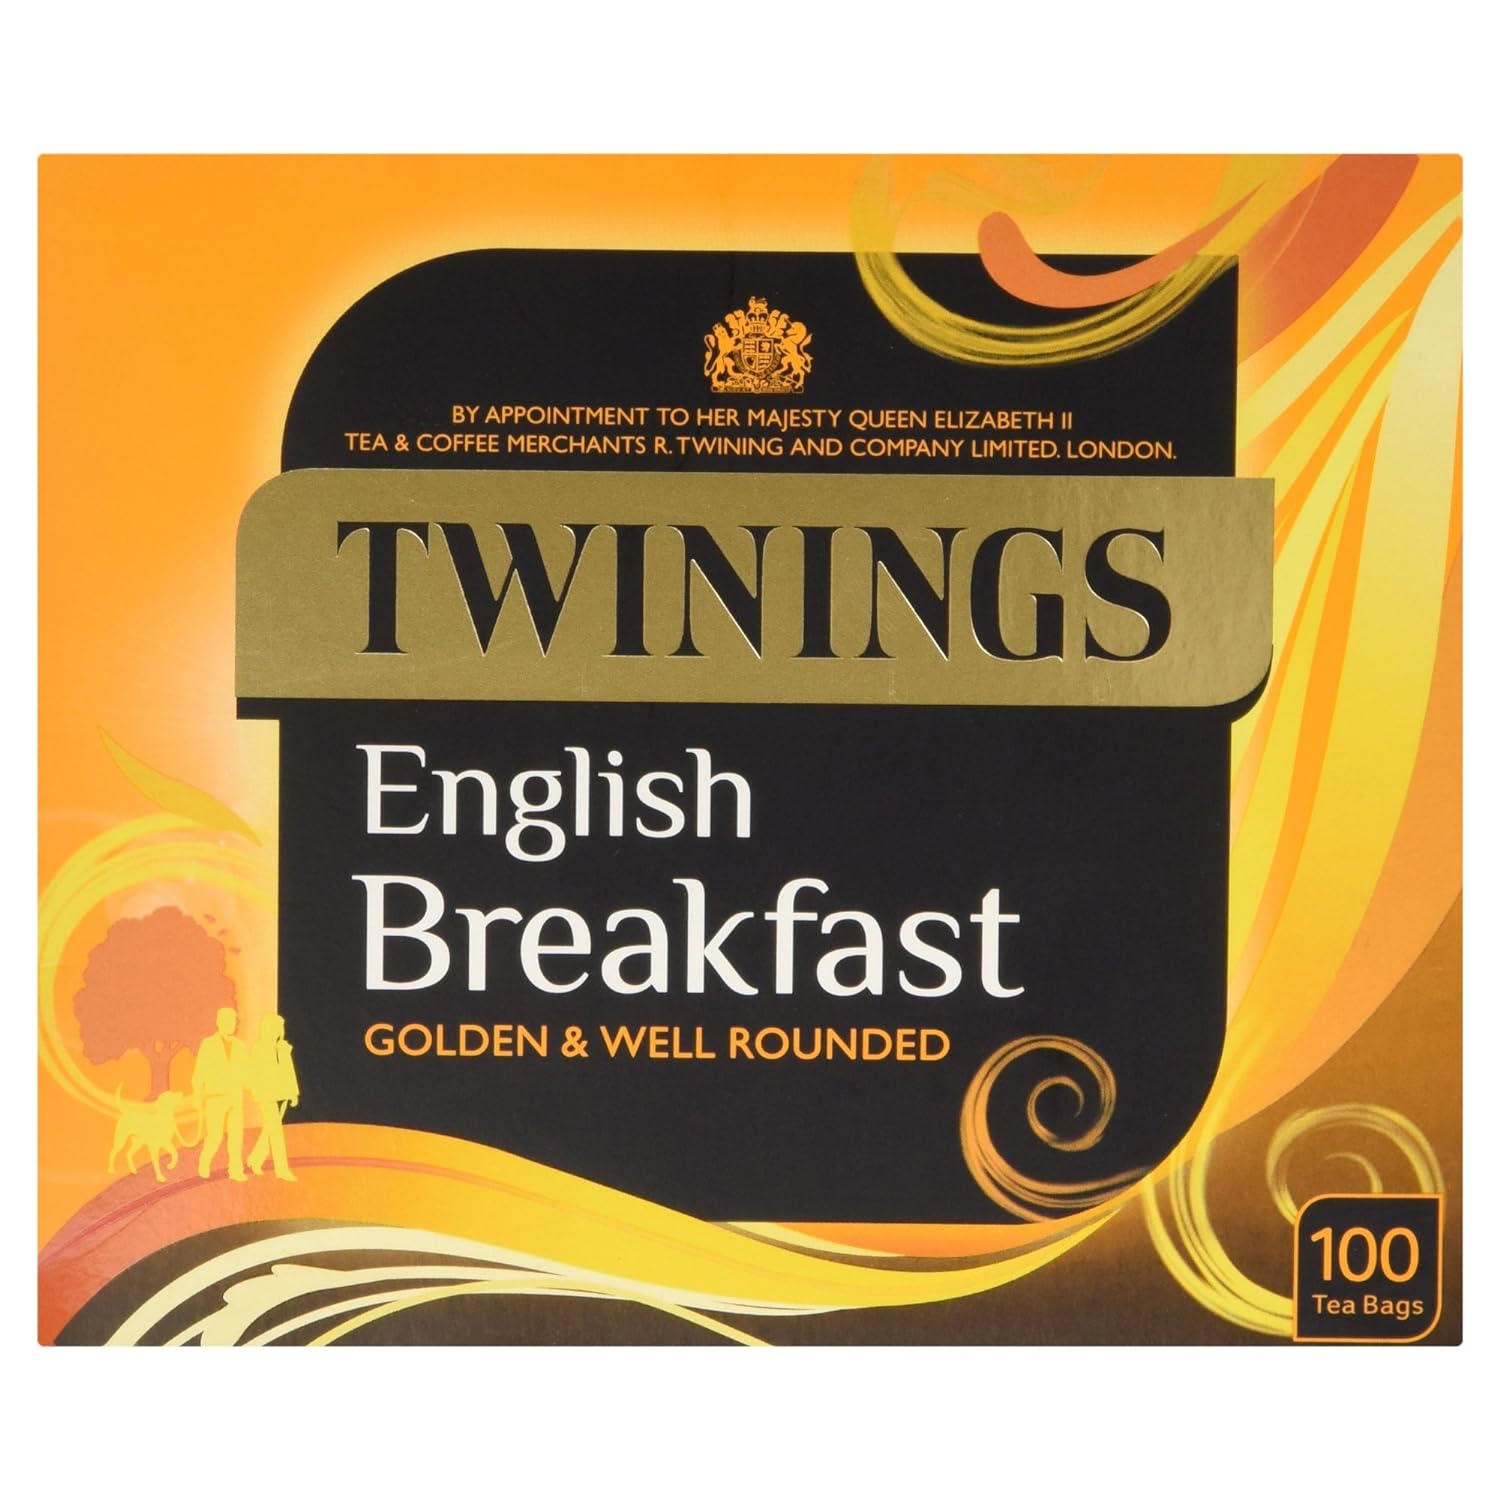 Twinings English Breakfast Tea Bags - Pack of 120